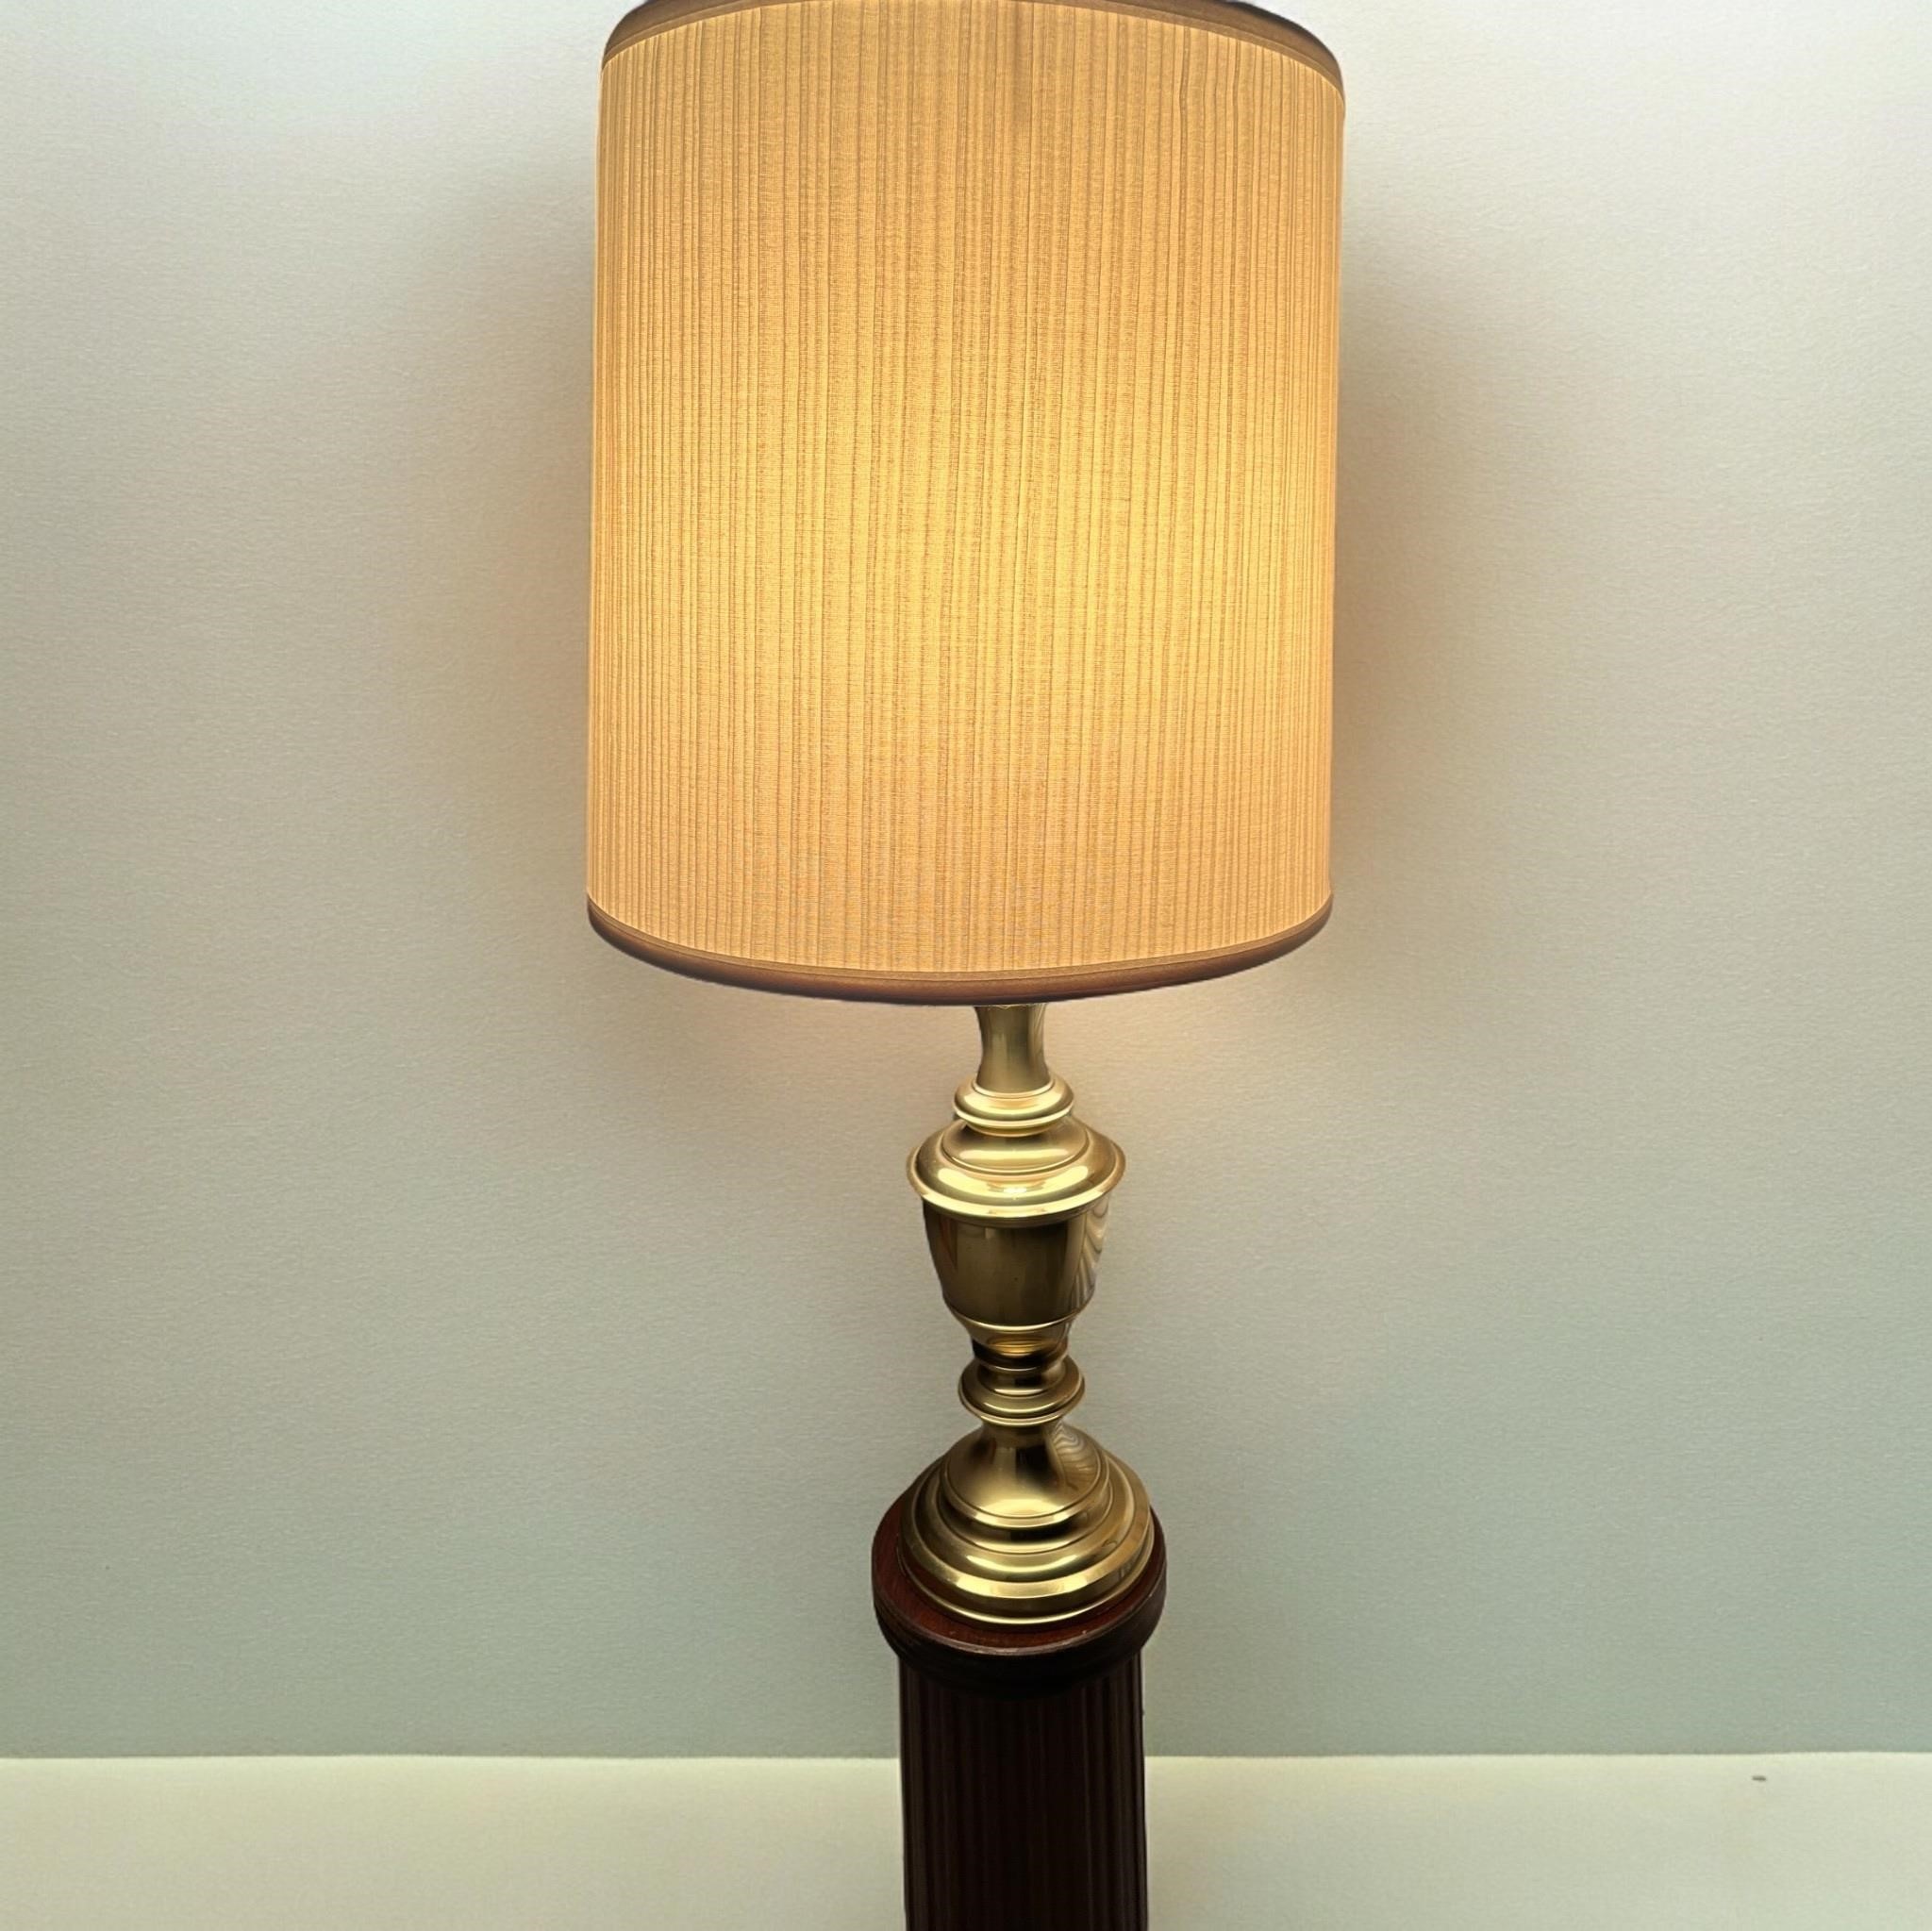 Heavy duty brass lamp with shade